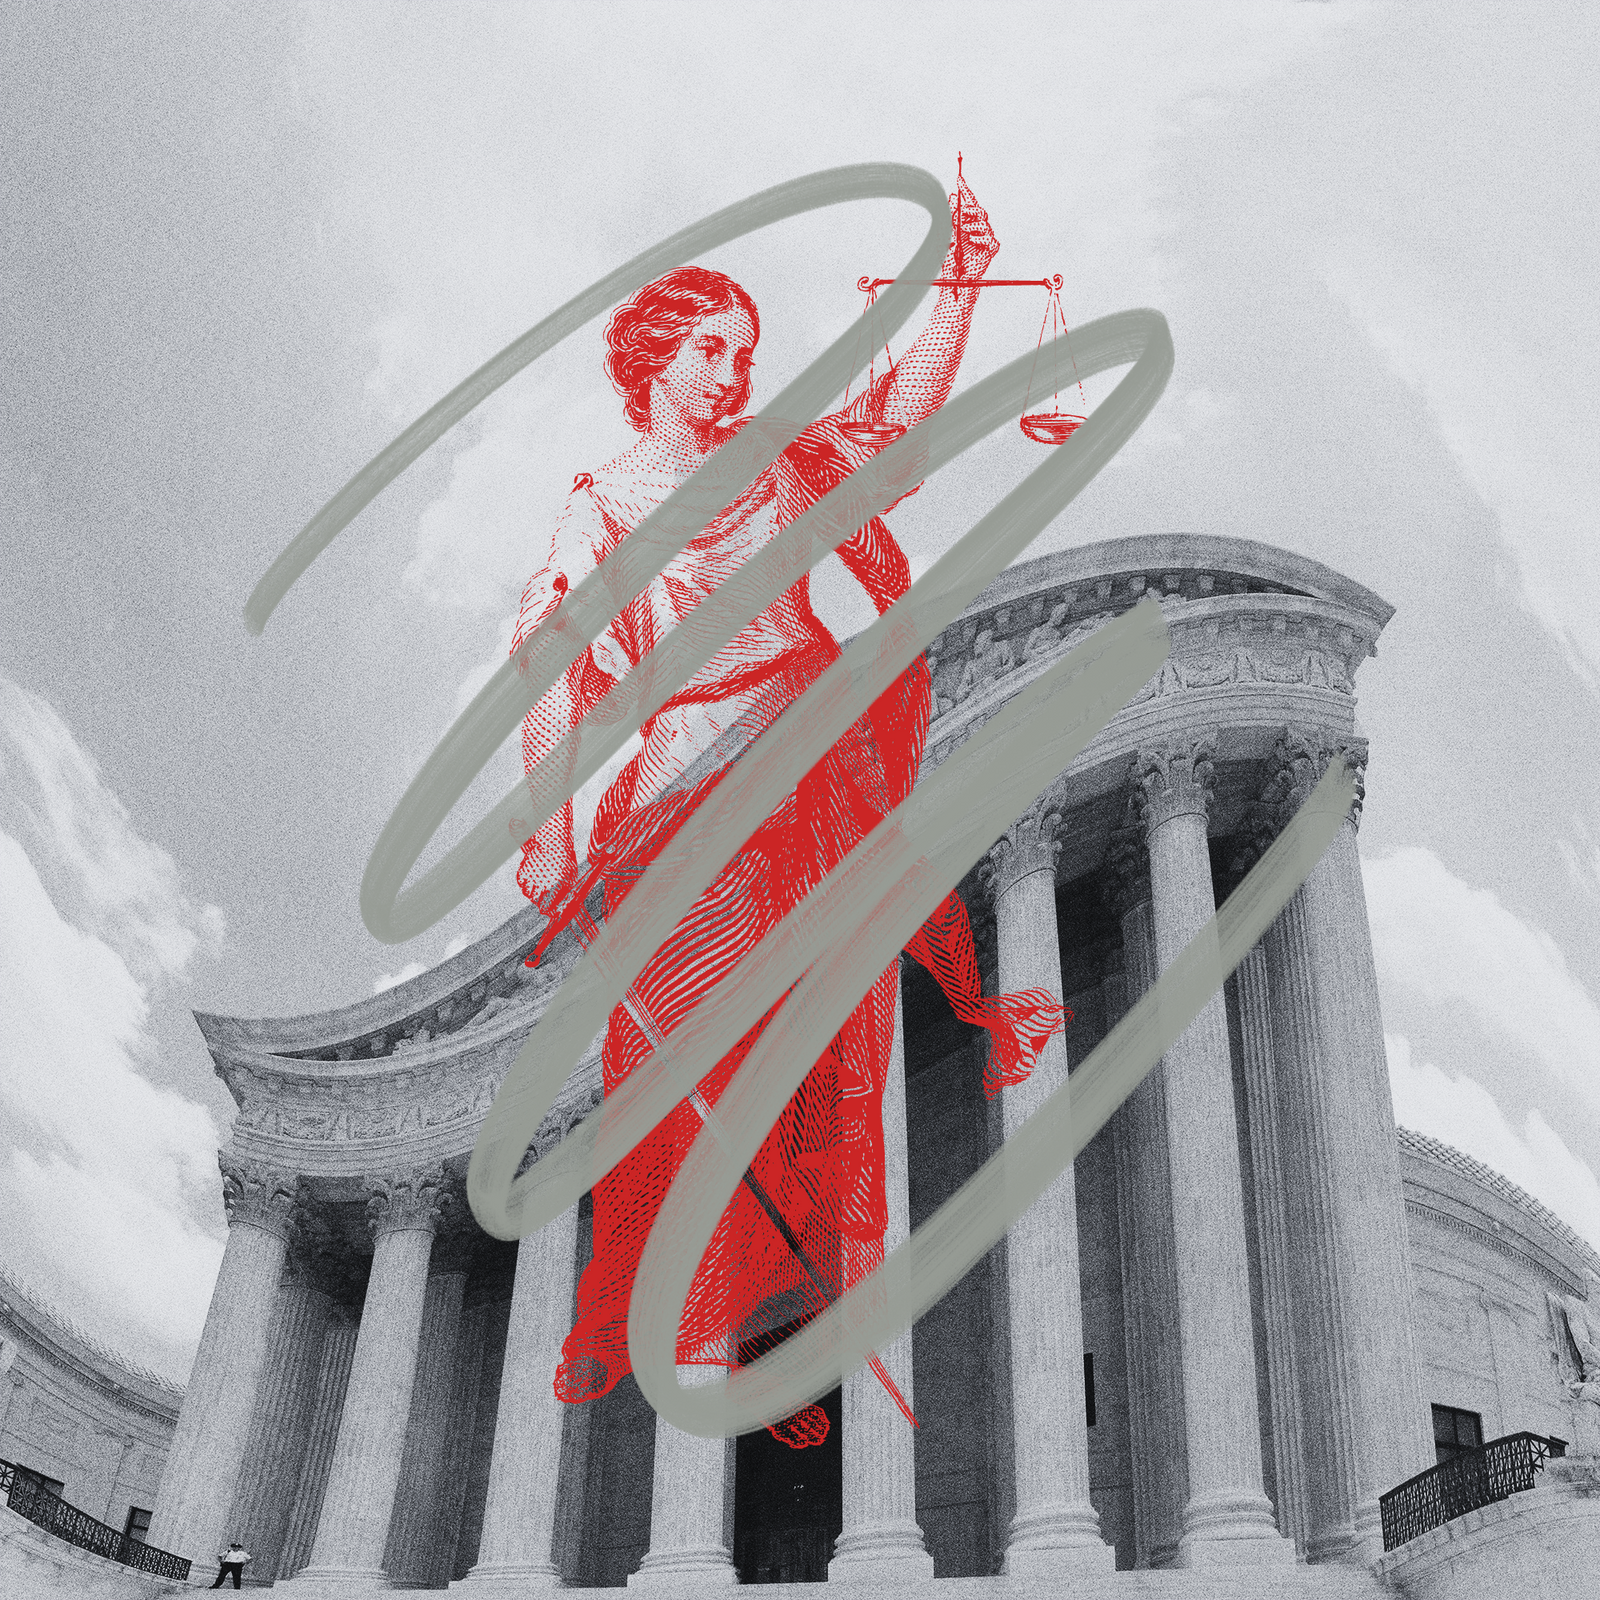 Half-human: A reflection on Supreme Court decisions and womanhood